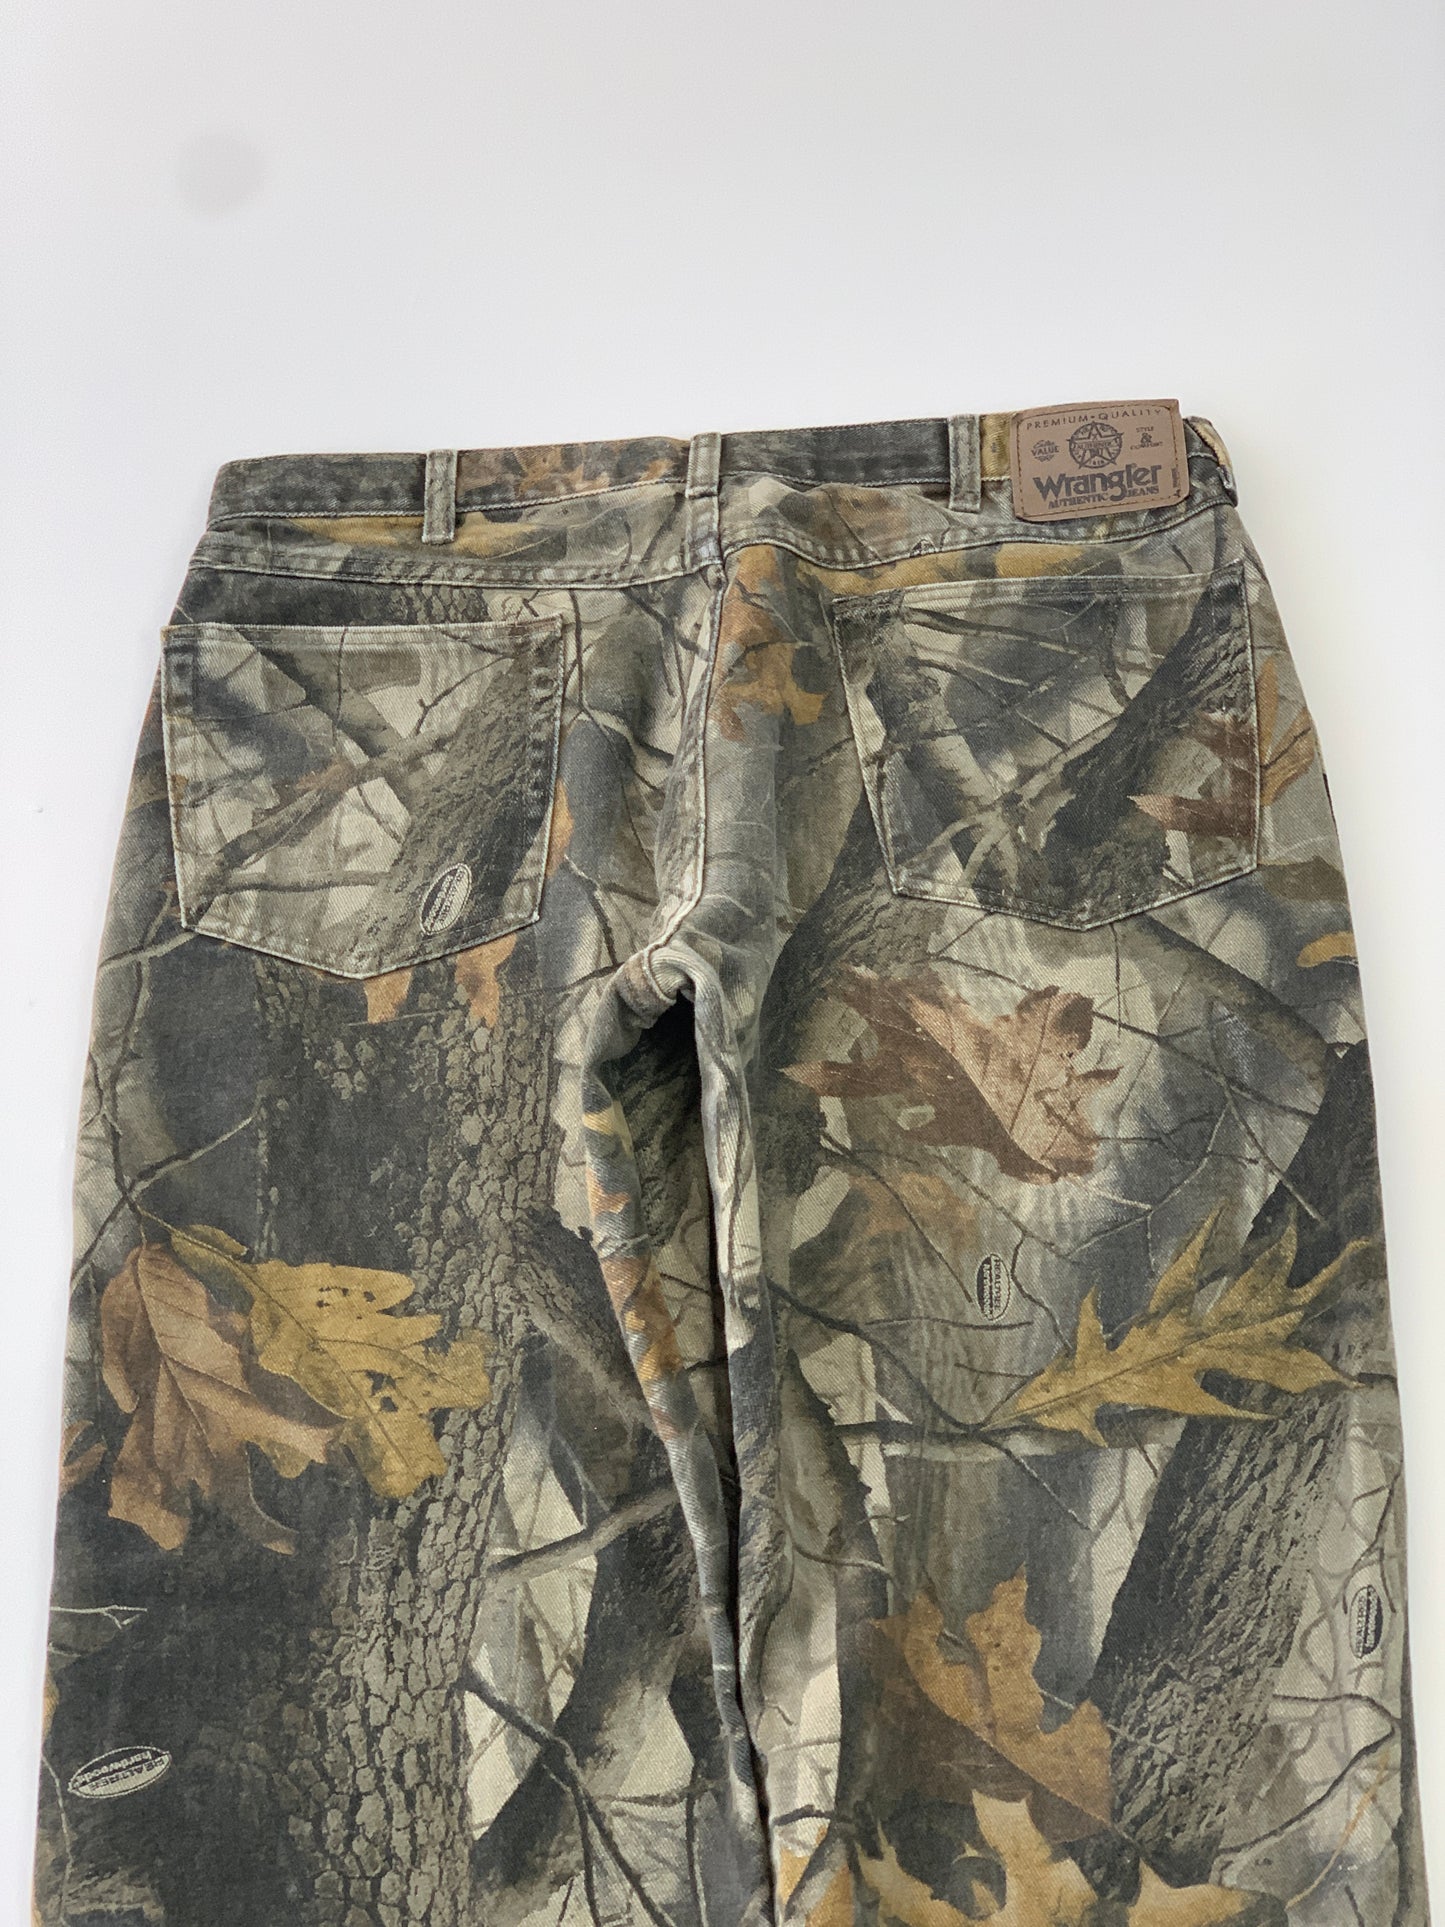 Wrangler Realtree Double Knee Vintage Camo Pants - 36 x 30